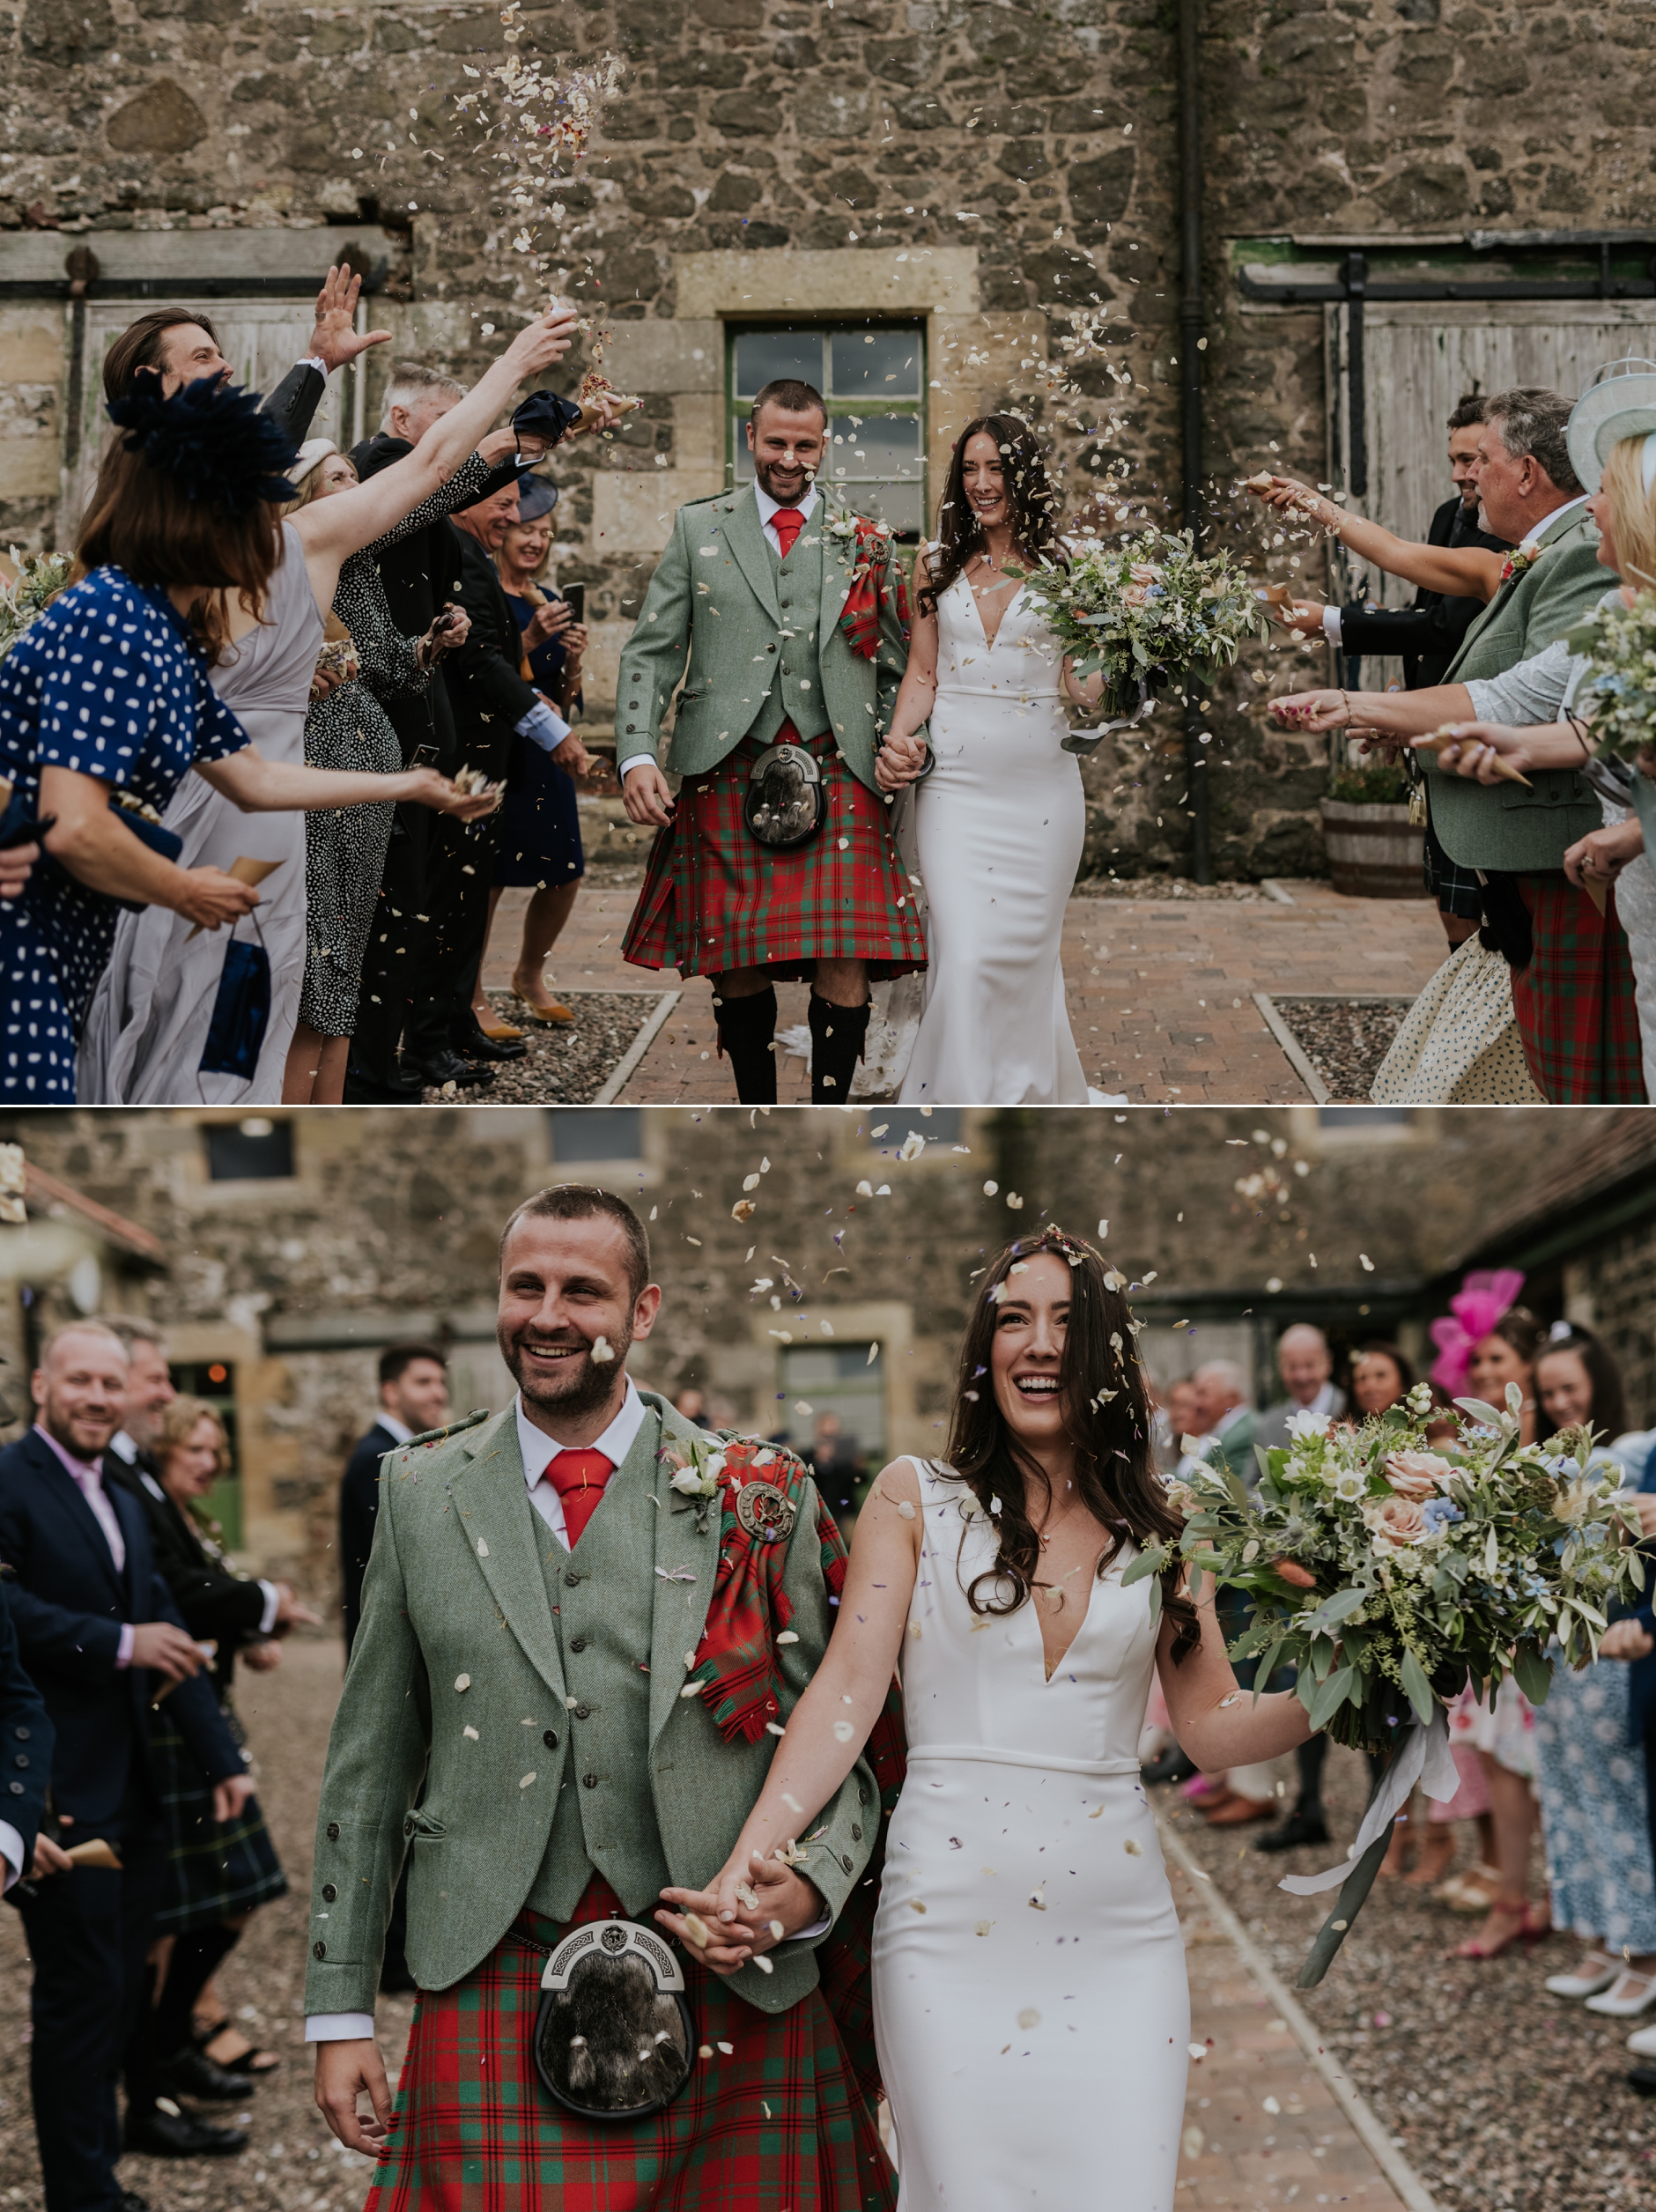 barn wedding venues scotland